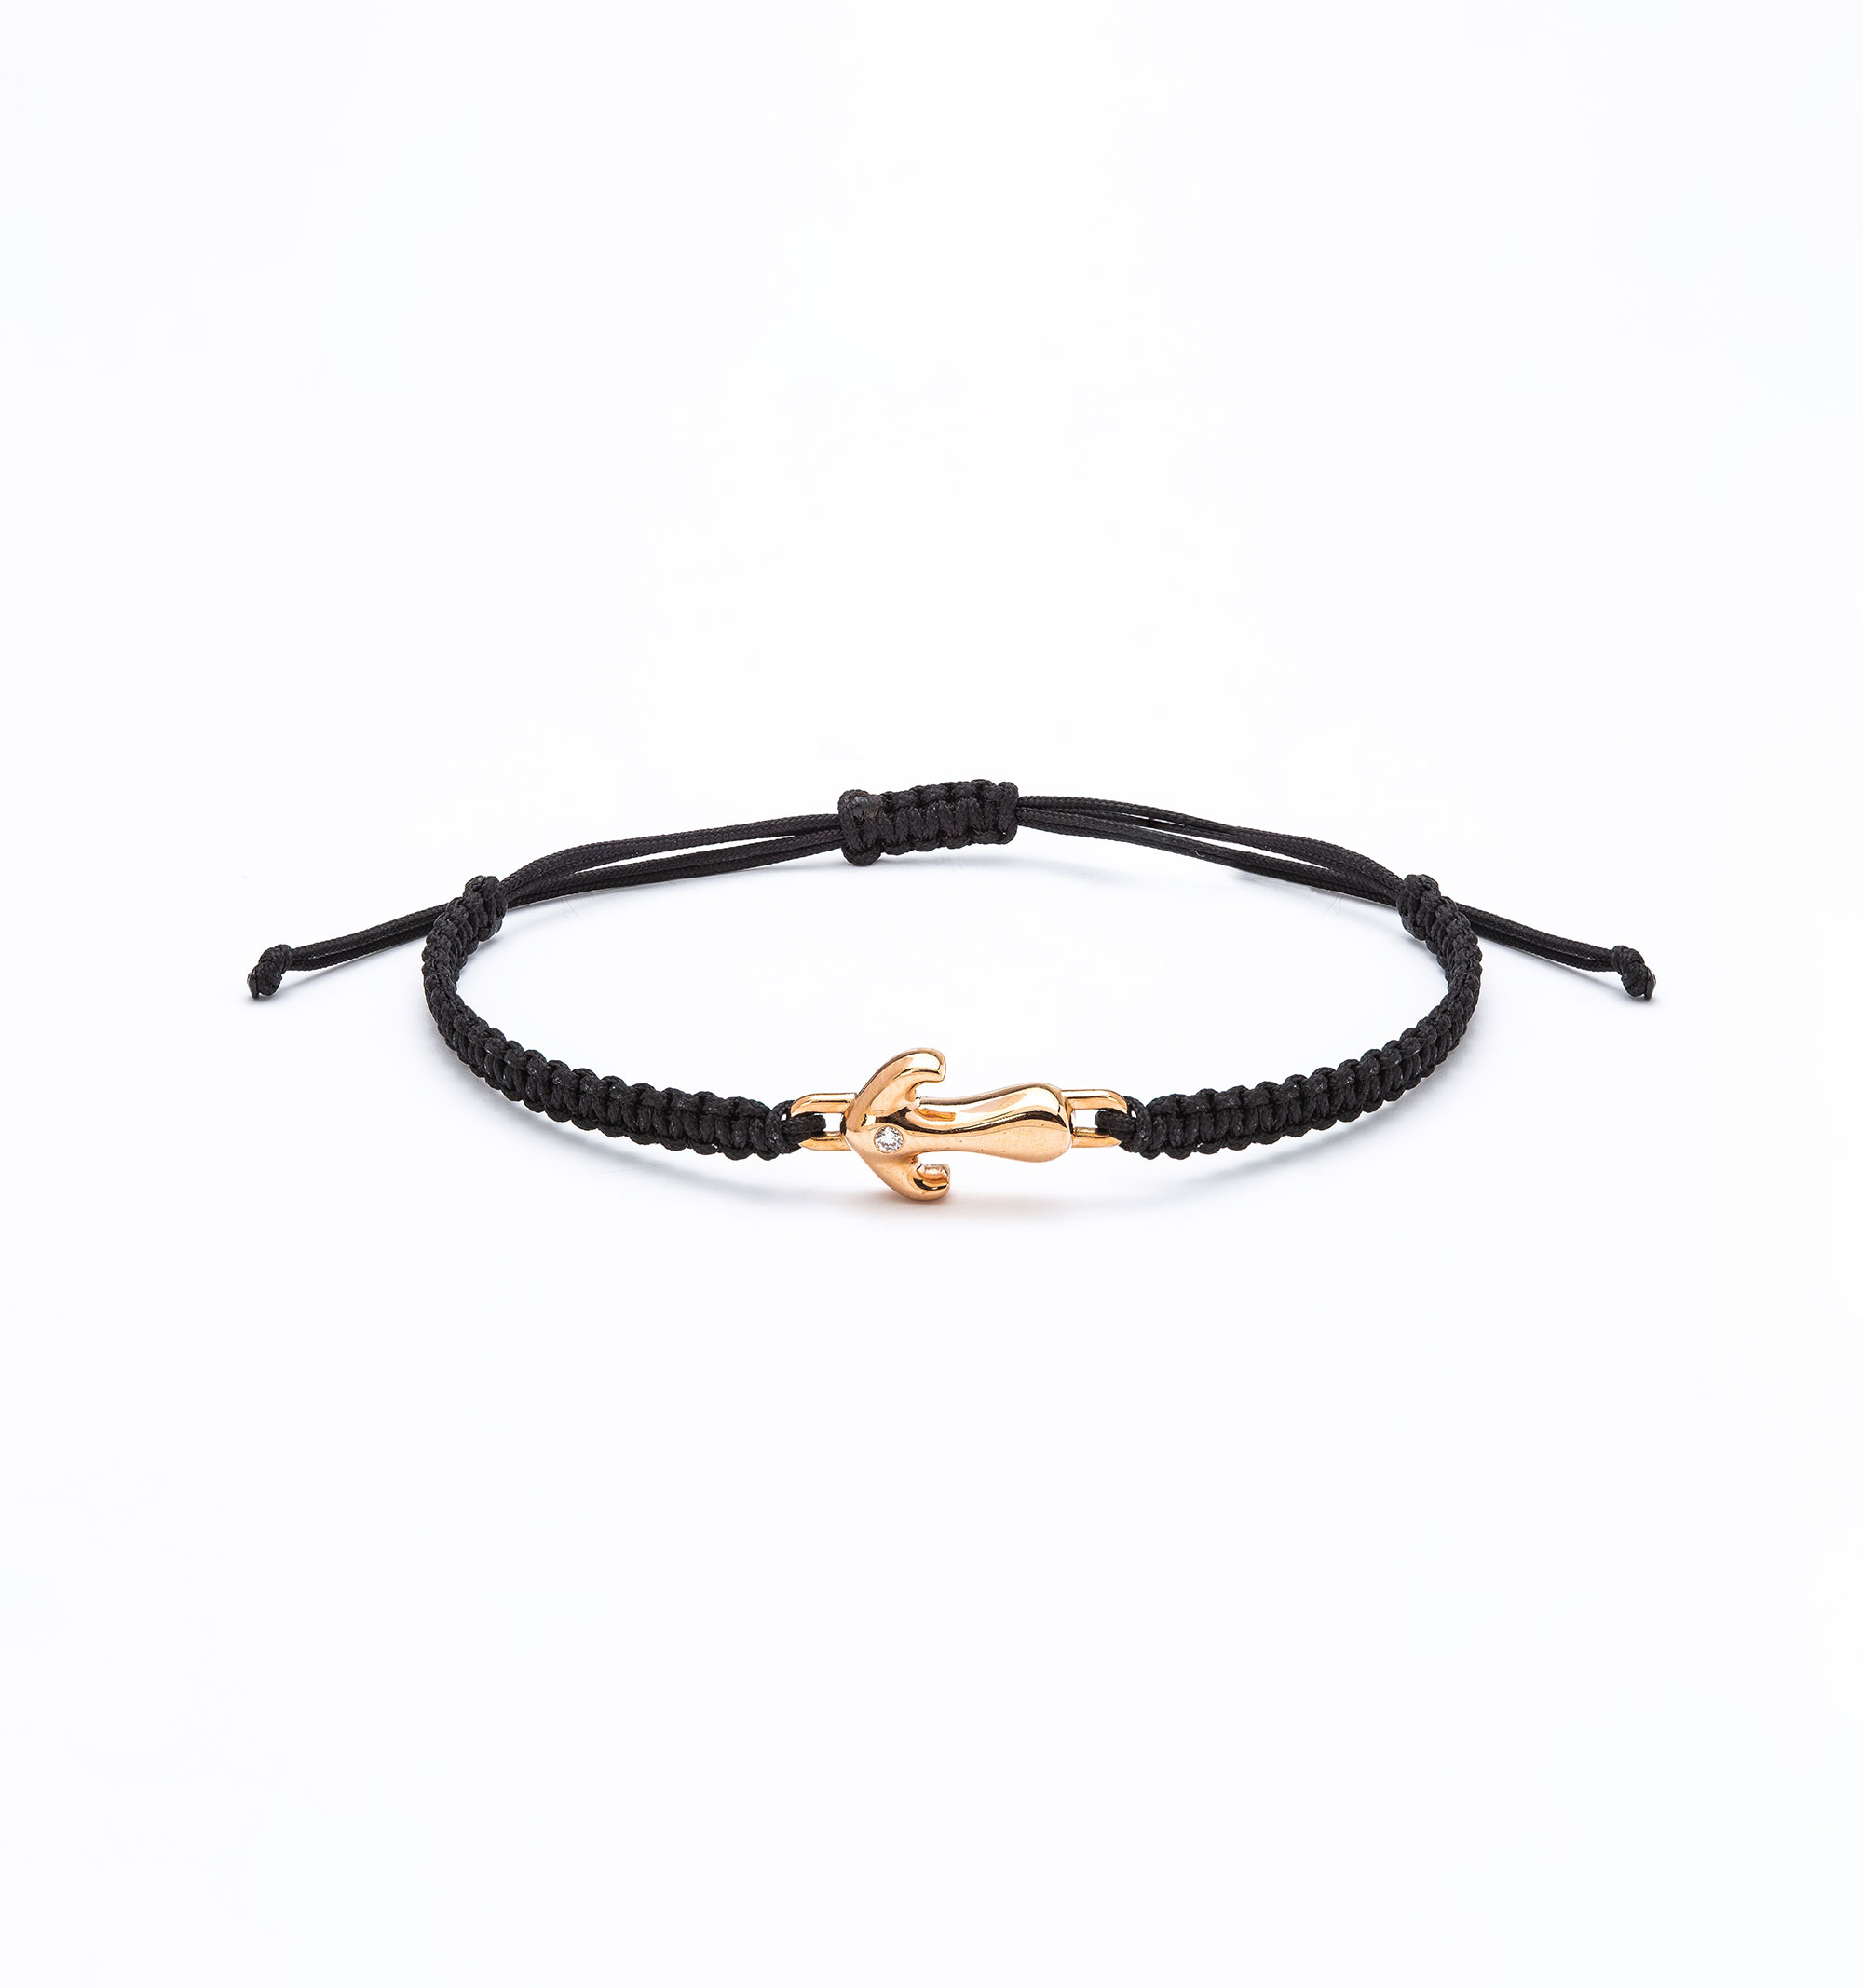 Buy Stainless Steel Bracelet For Men Online - Inox Jewelry Tagged 